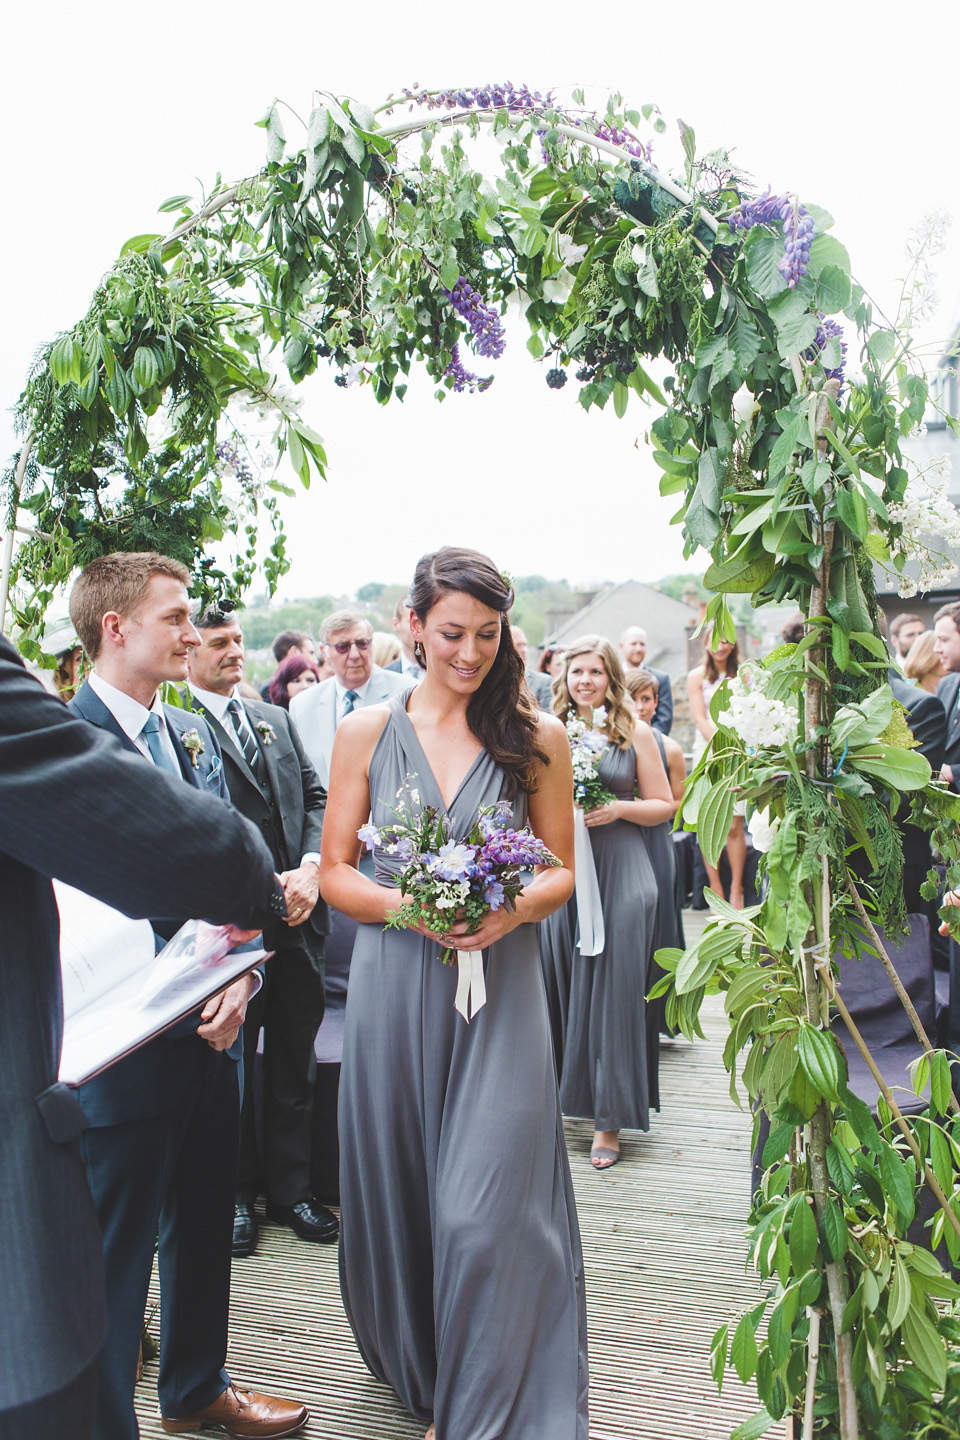 rowanjoy, scottish weddings, outdoor weddings, humanist ceremony, wildflower weddings